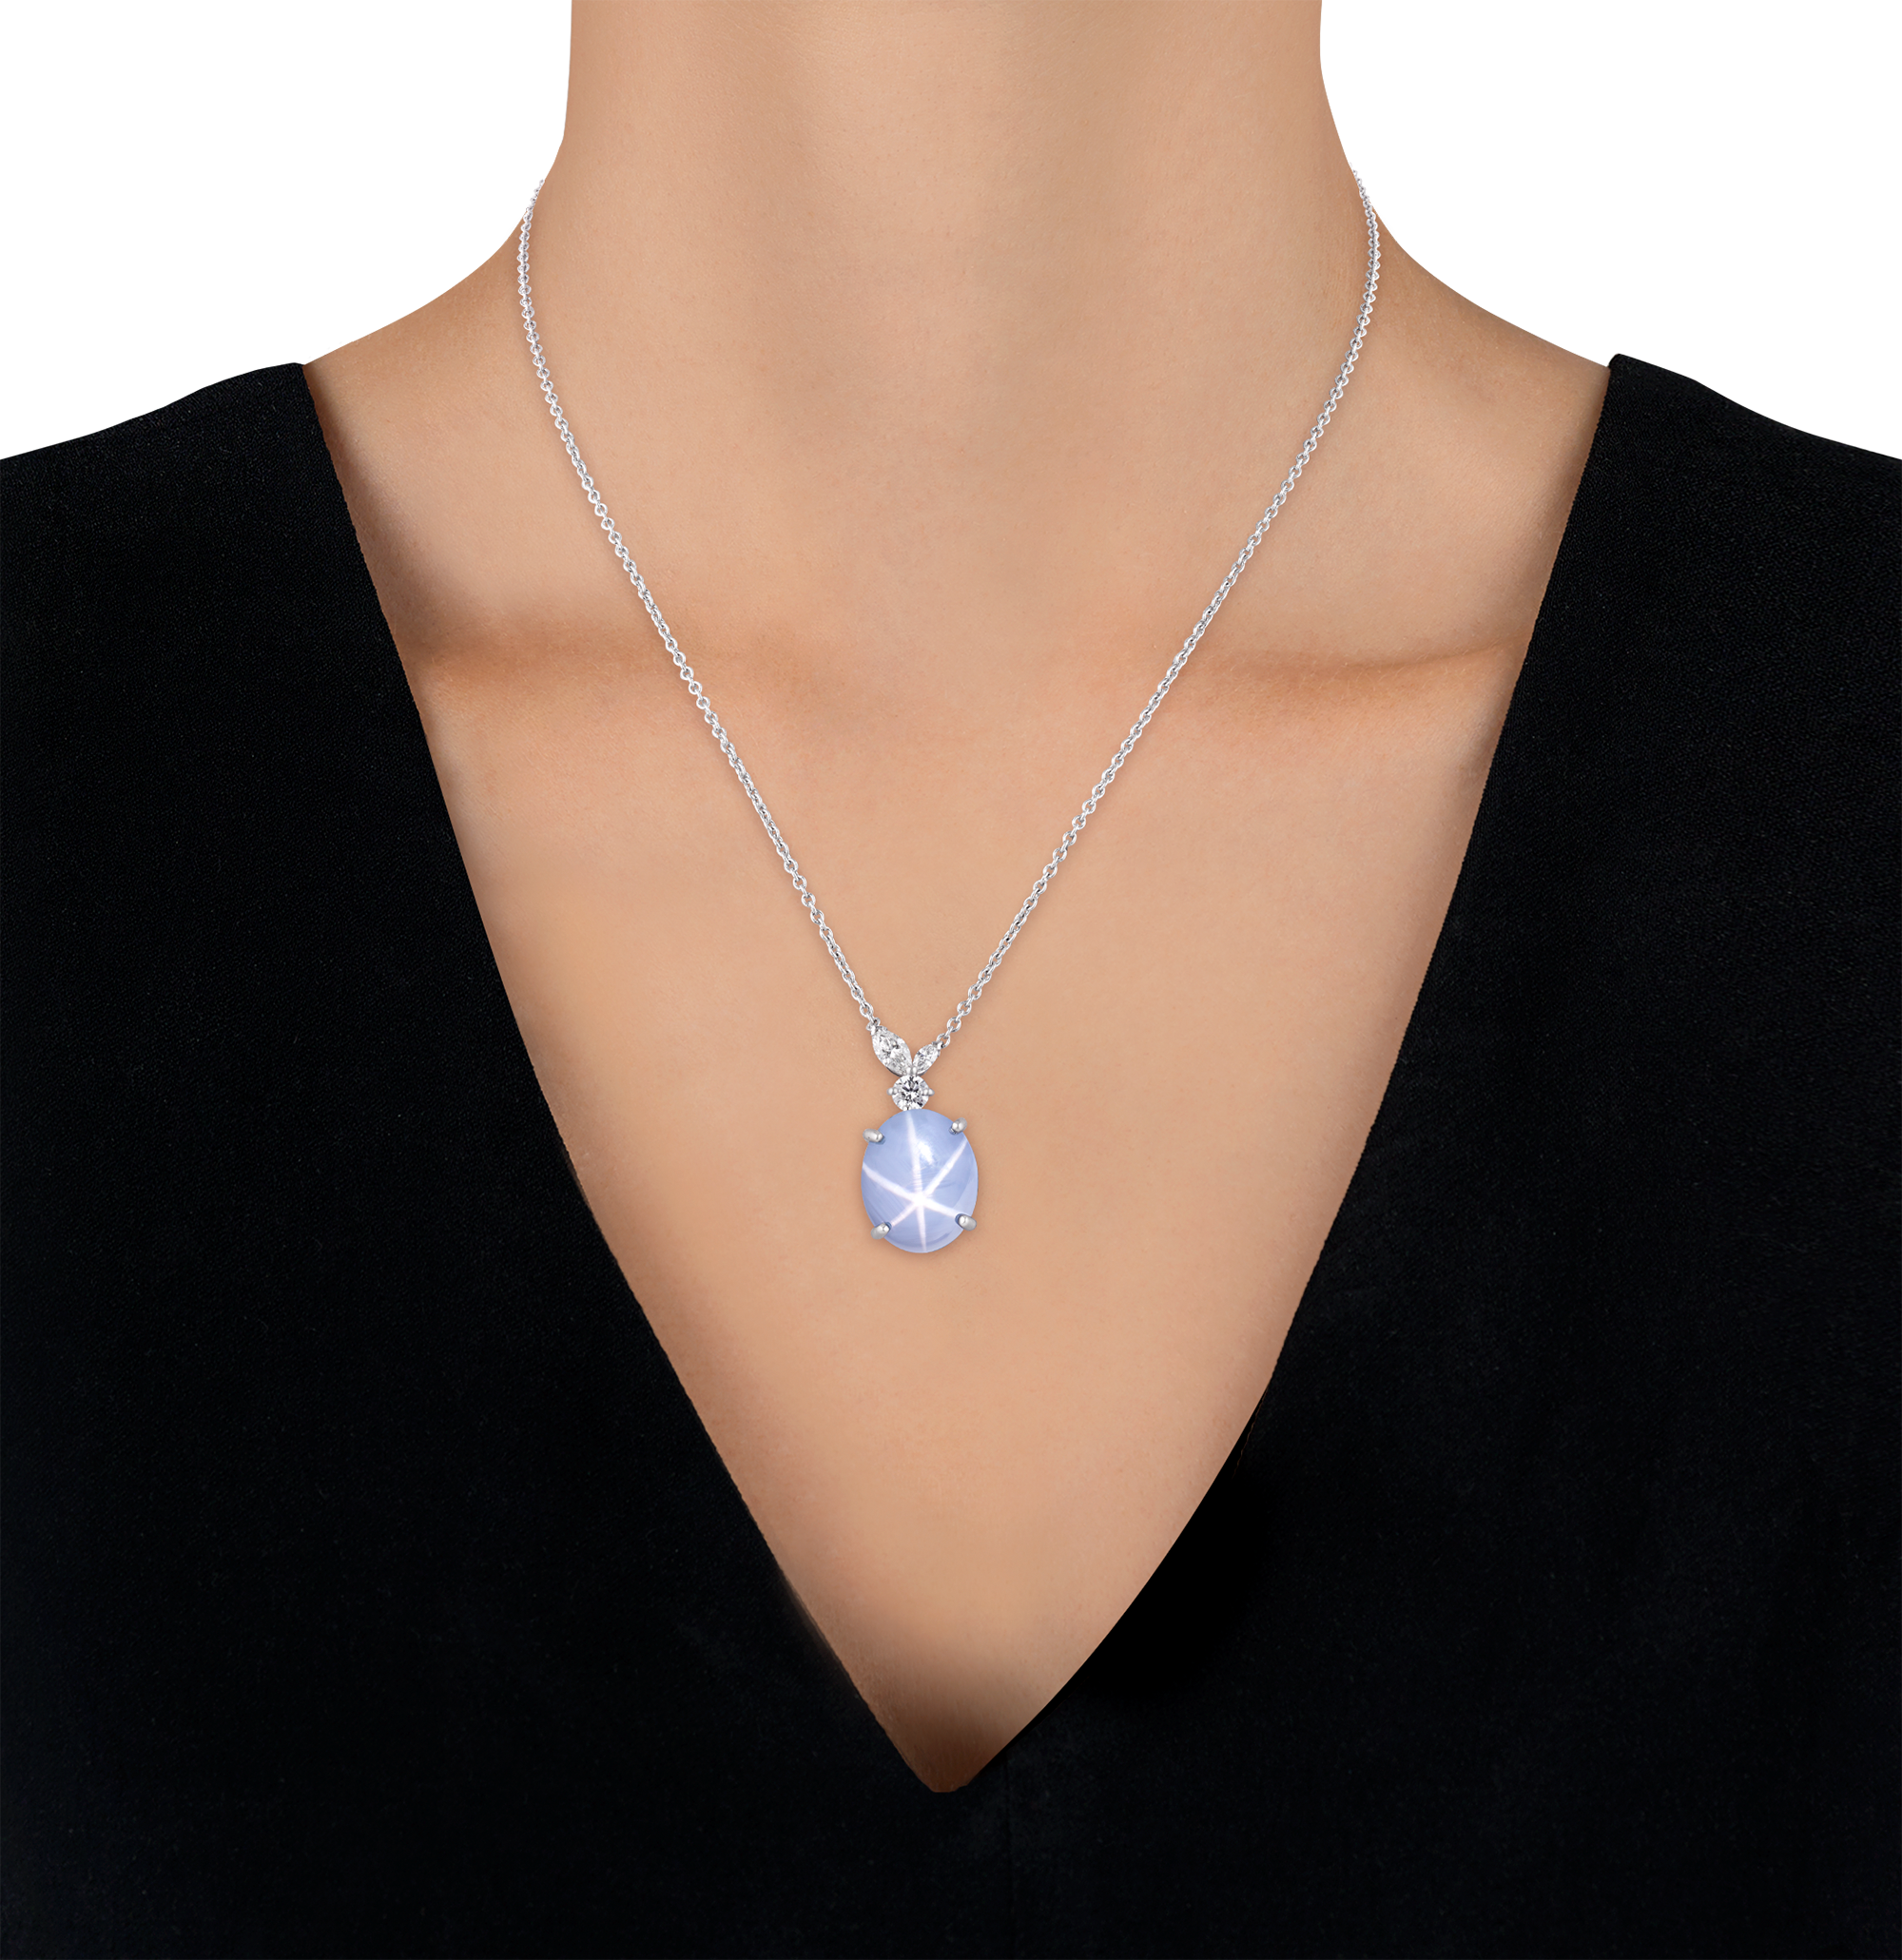 Oscar Heyman Ceylon Star Sapphire Pendant, 11.69 carats